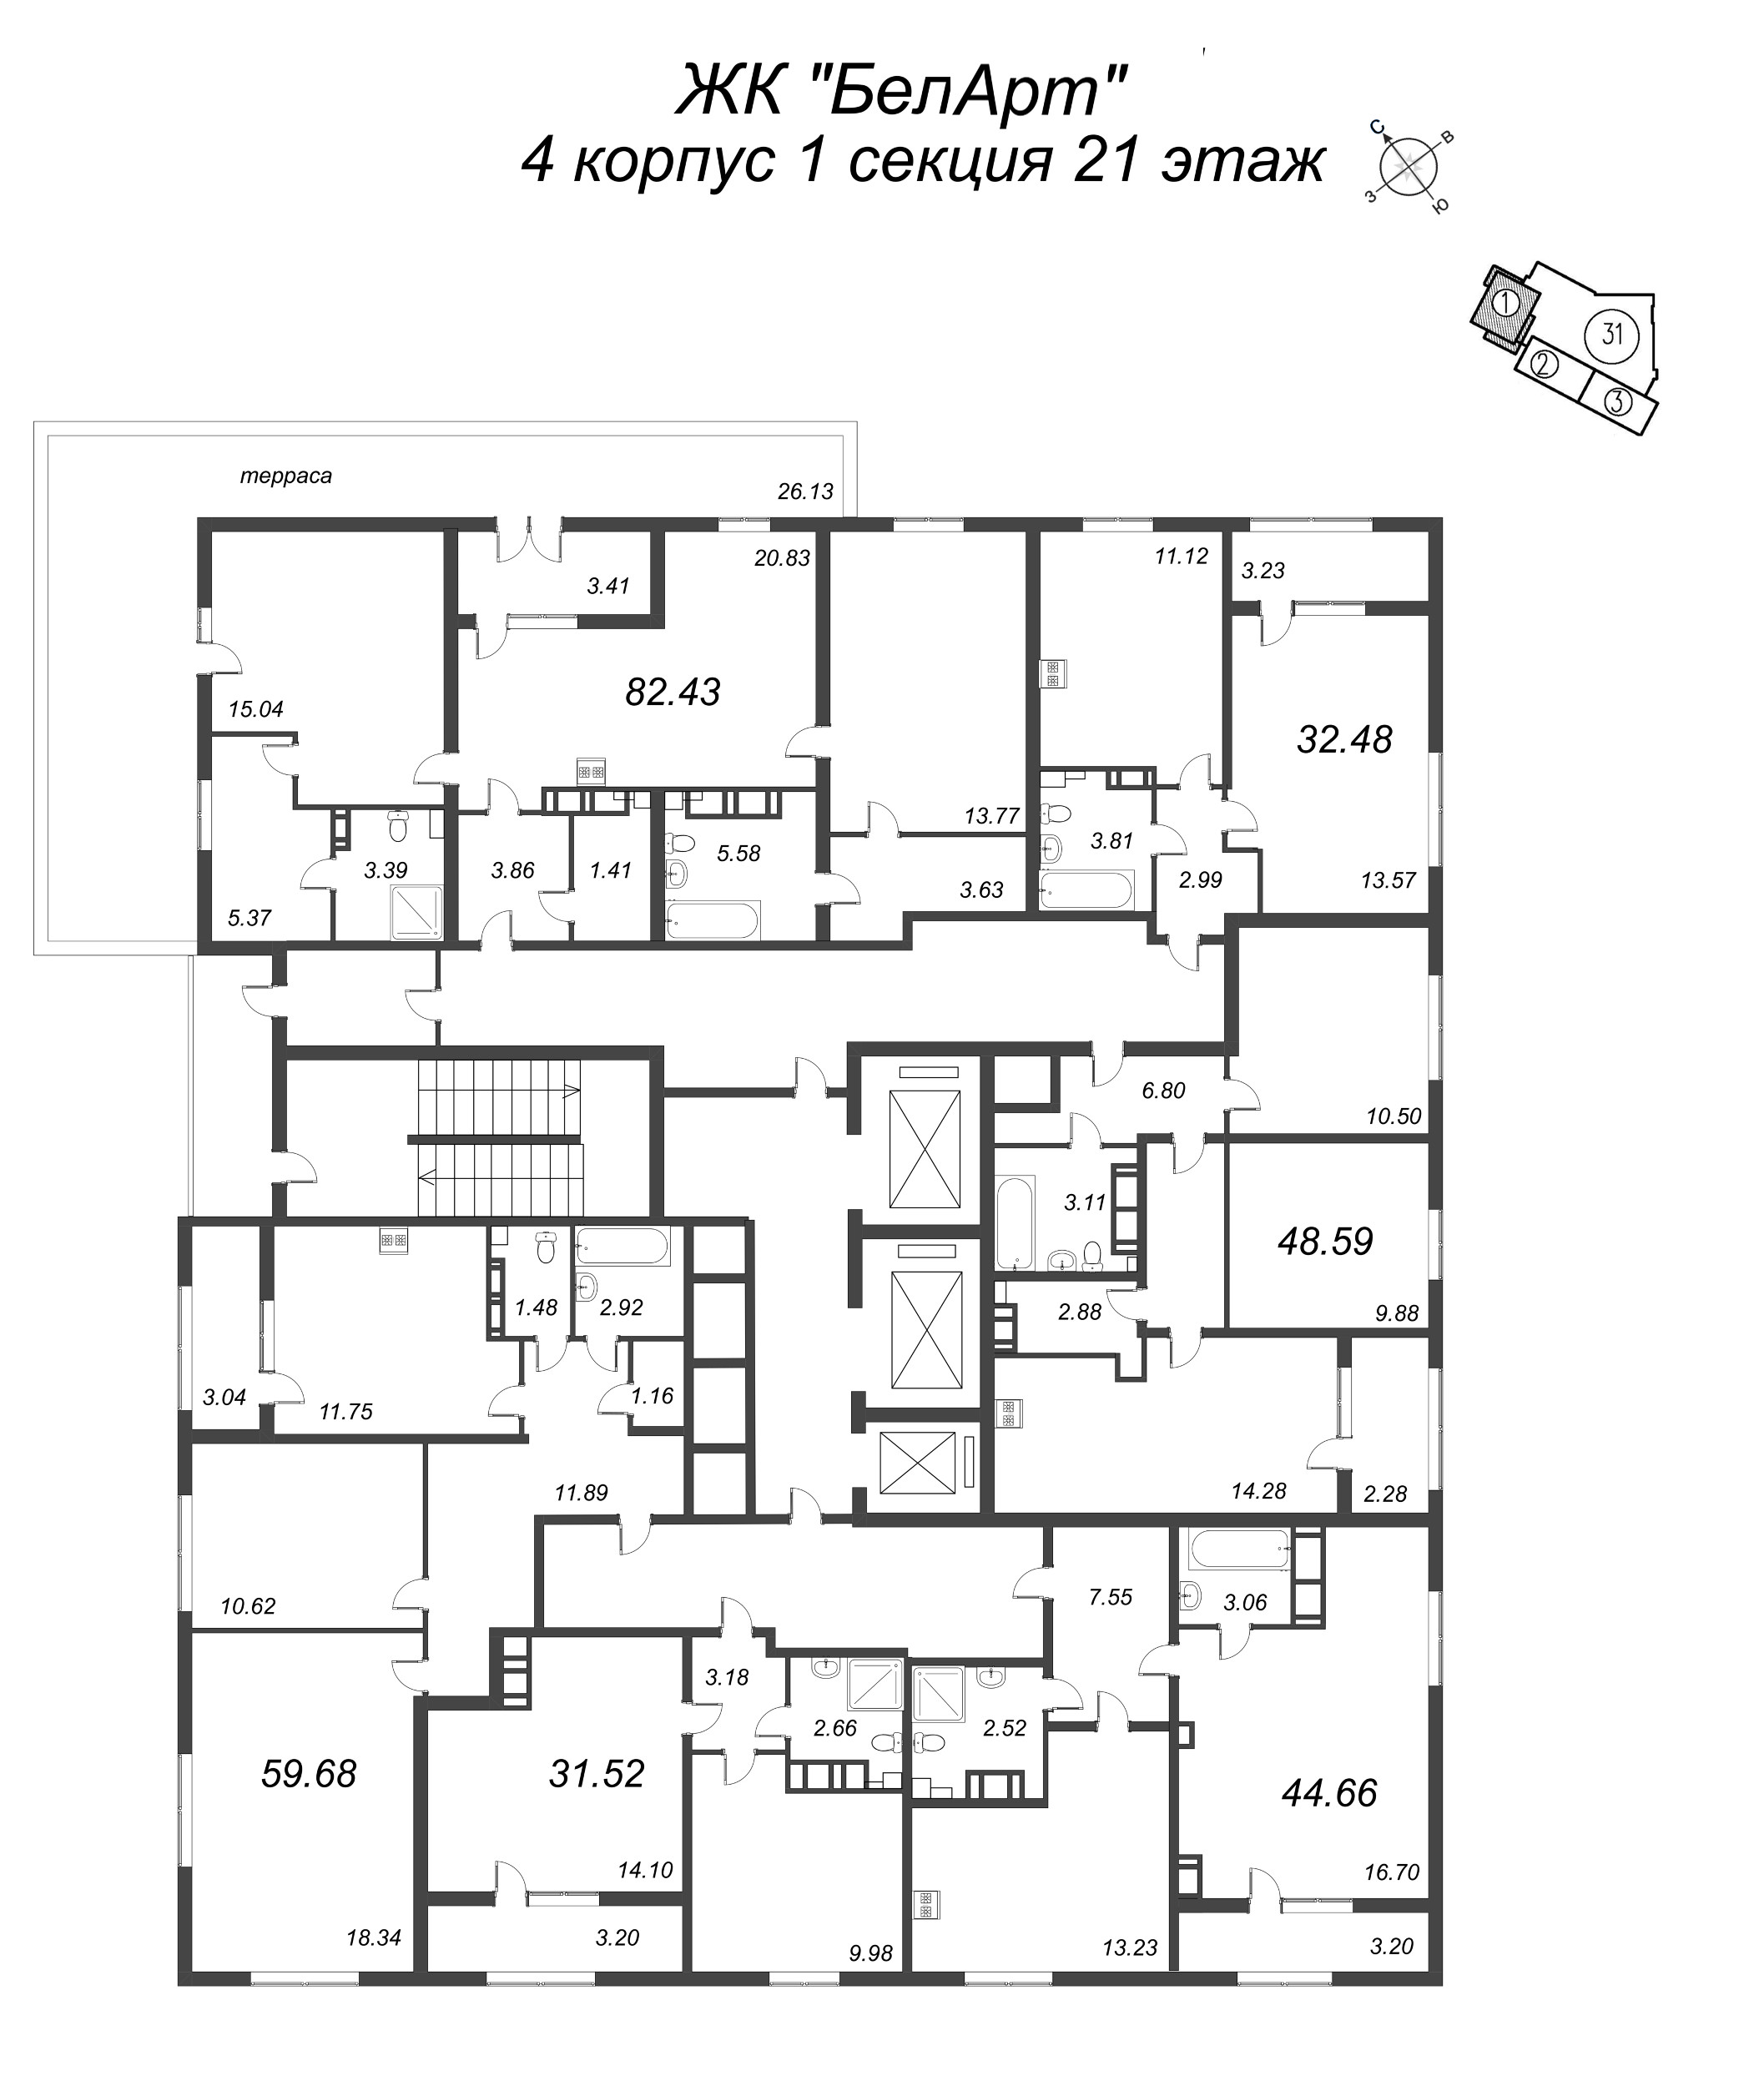 2-комнатная квартира, 59.68 м² в ЖК "БелАрт" - планировка этажа